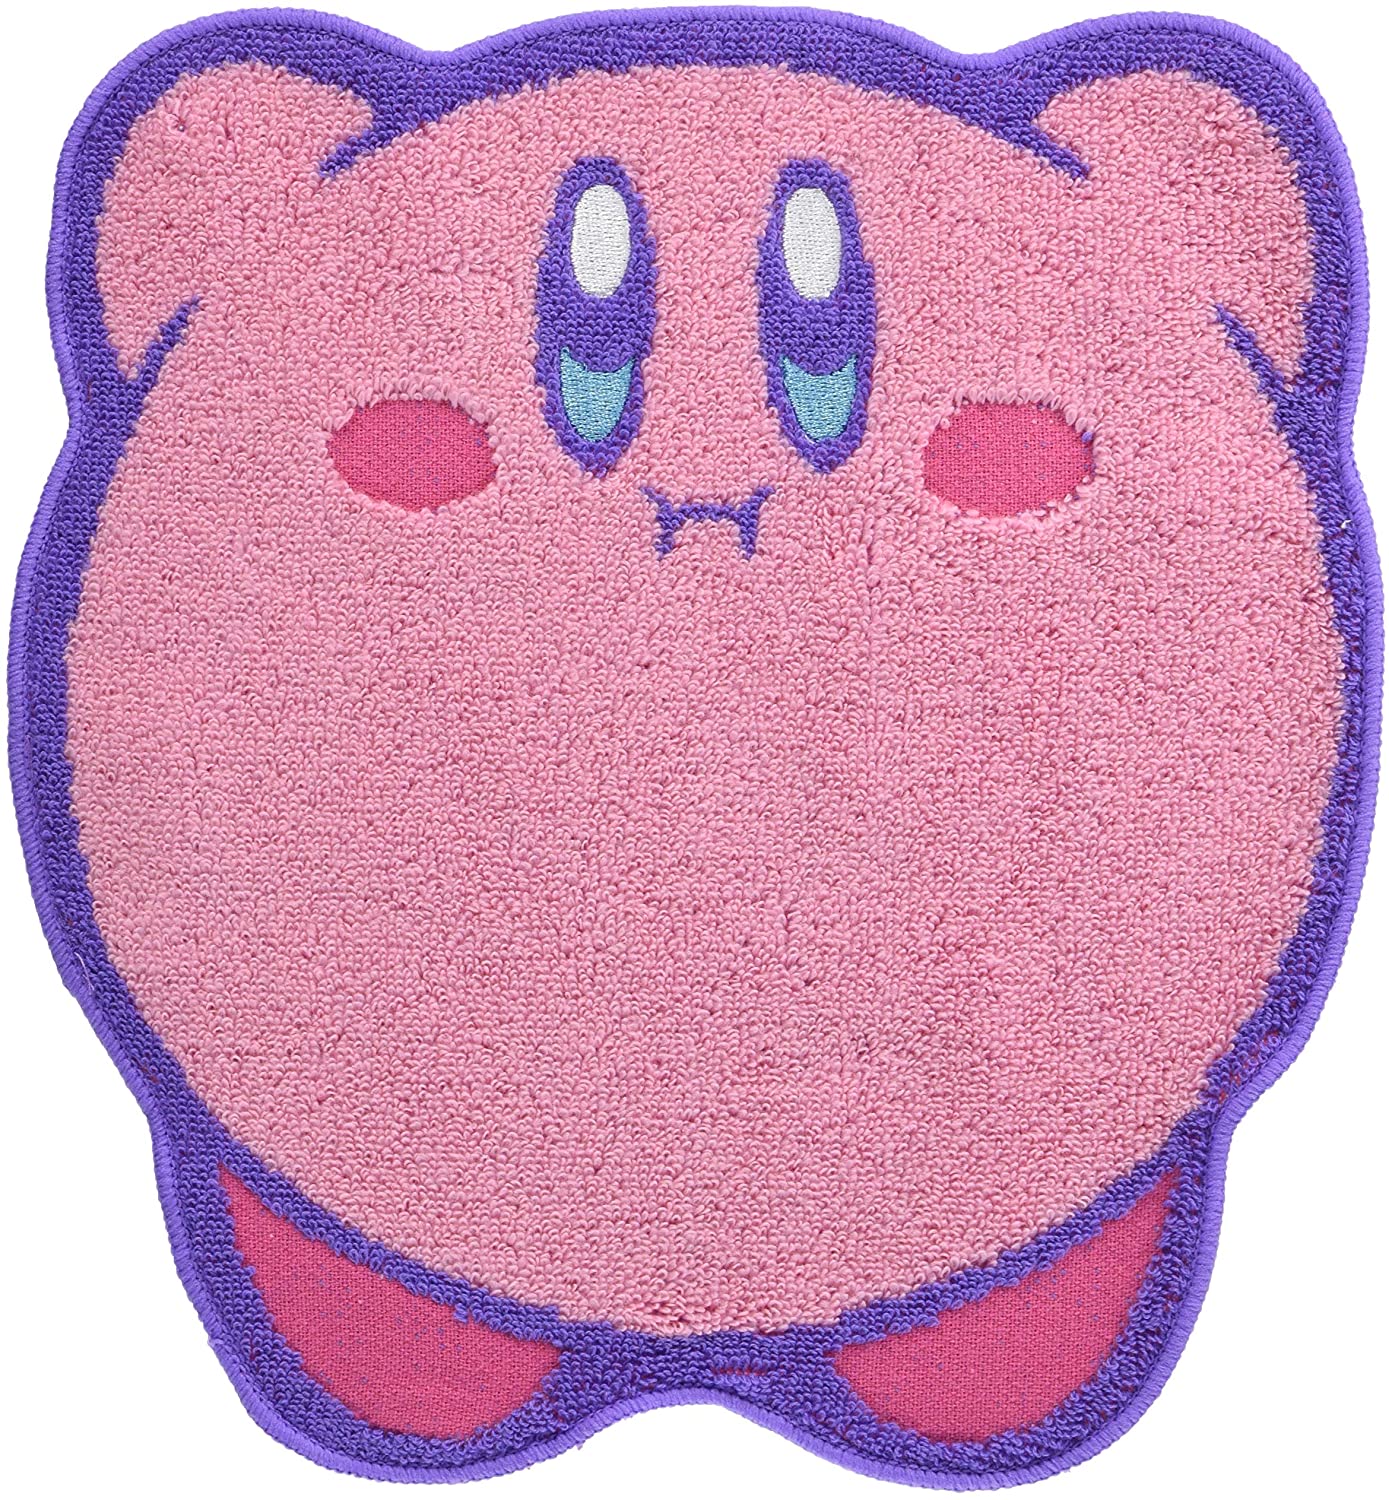 Marushin 4585003600 Hand Towel, Nintendo Star Kirby, 9.8 x 9.8 inches (25 x 25 cm), 100% Cotton